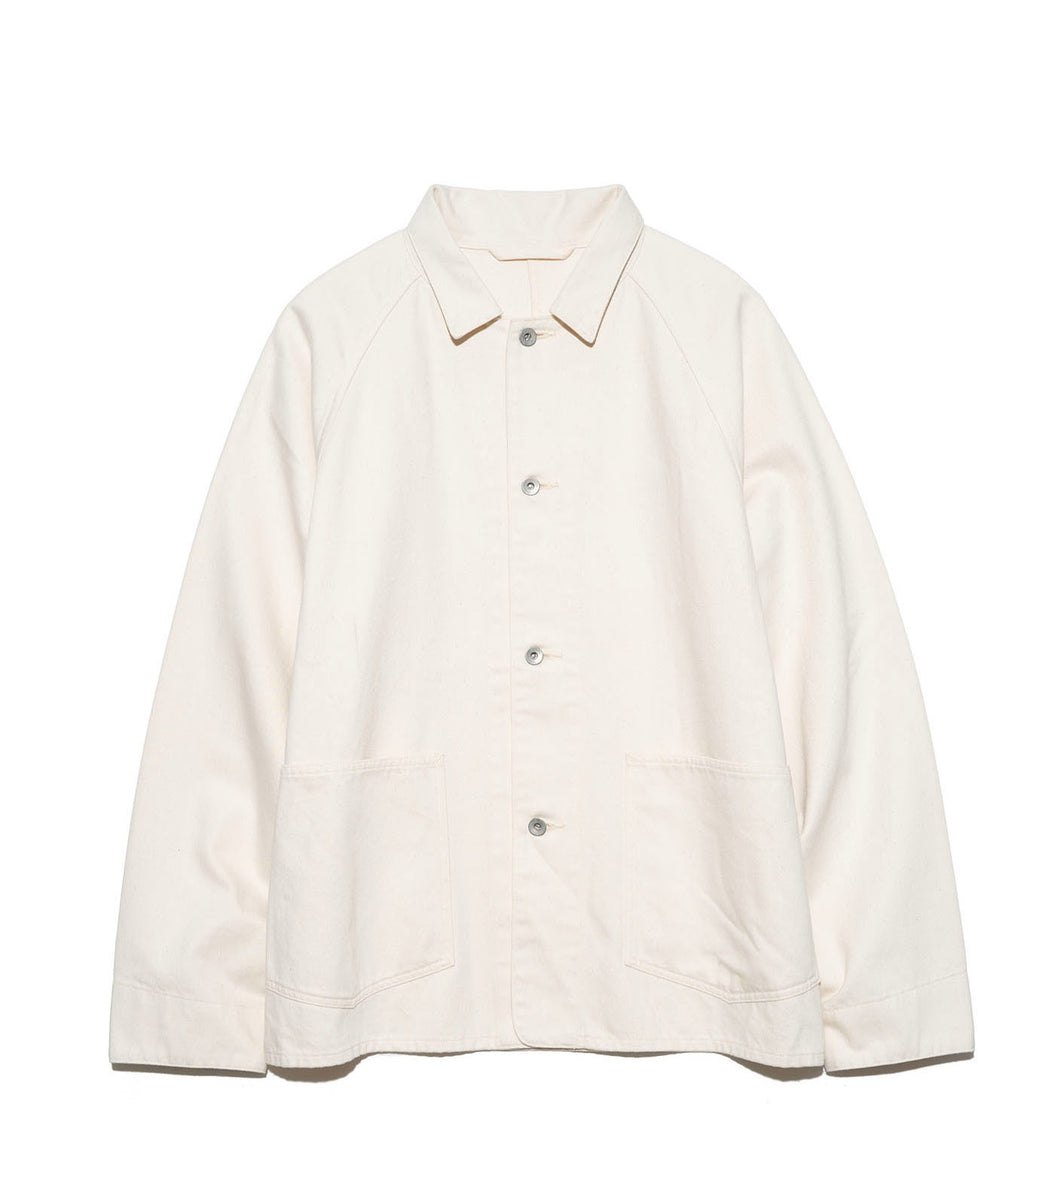 Nanamica Off-White Relaxed Denim Jacket